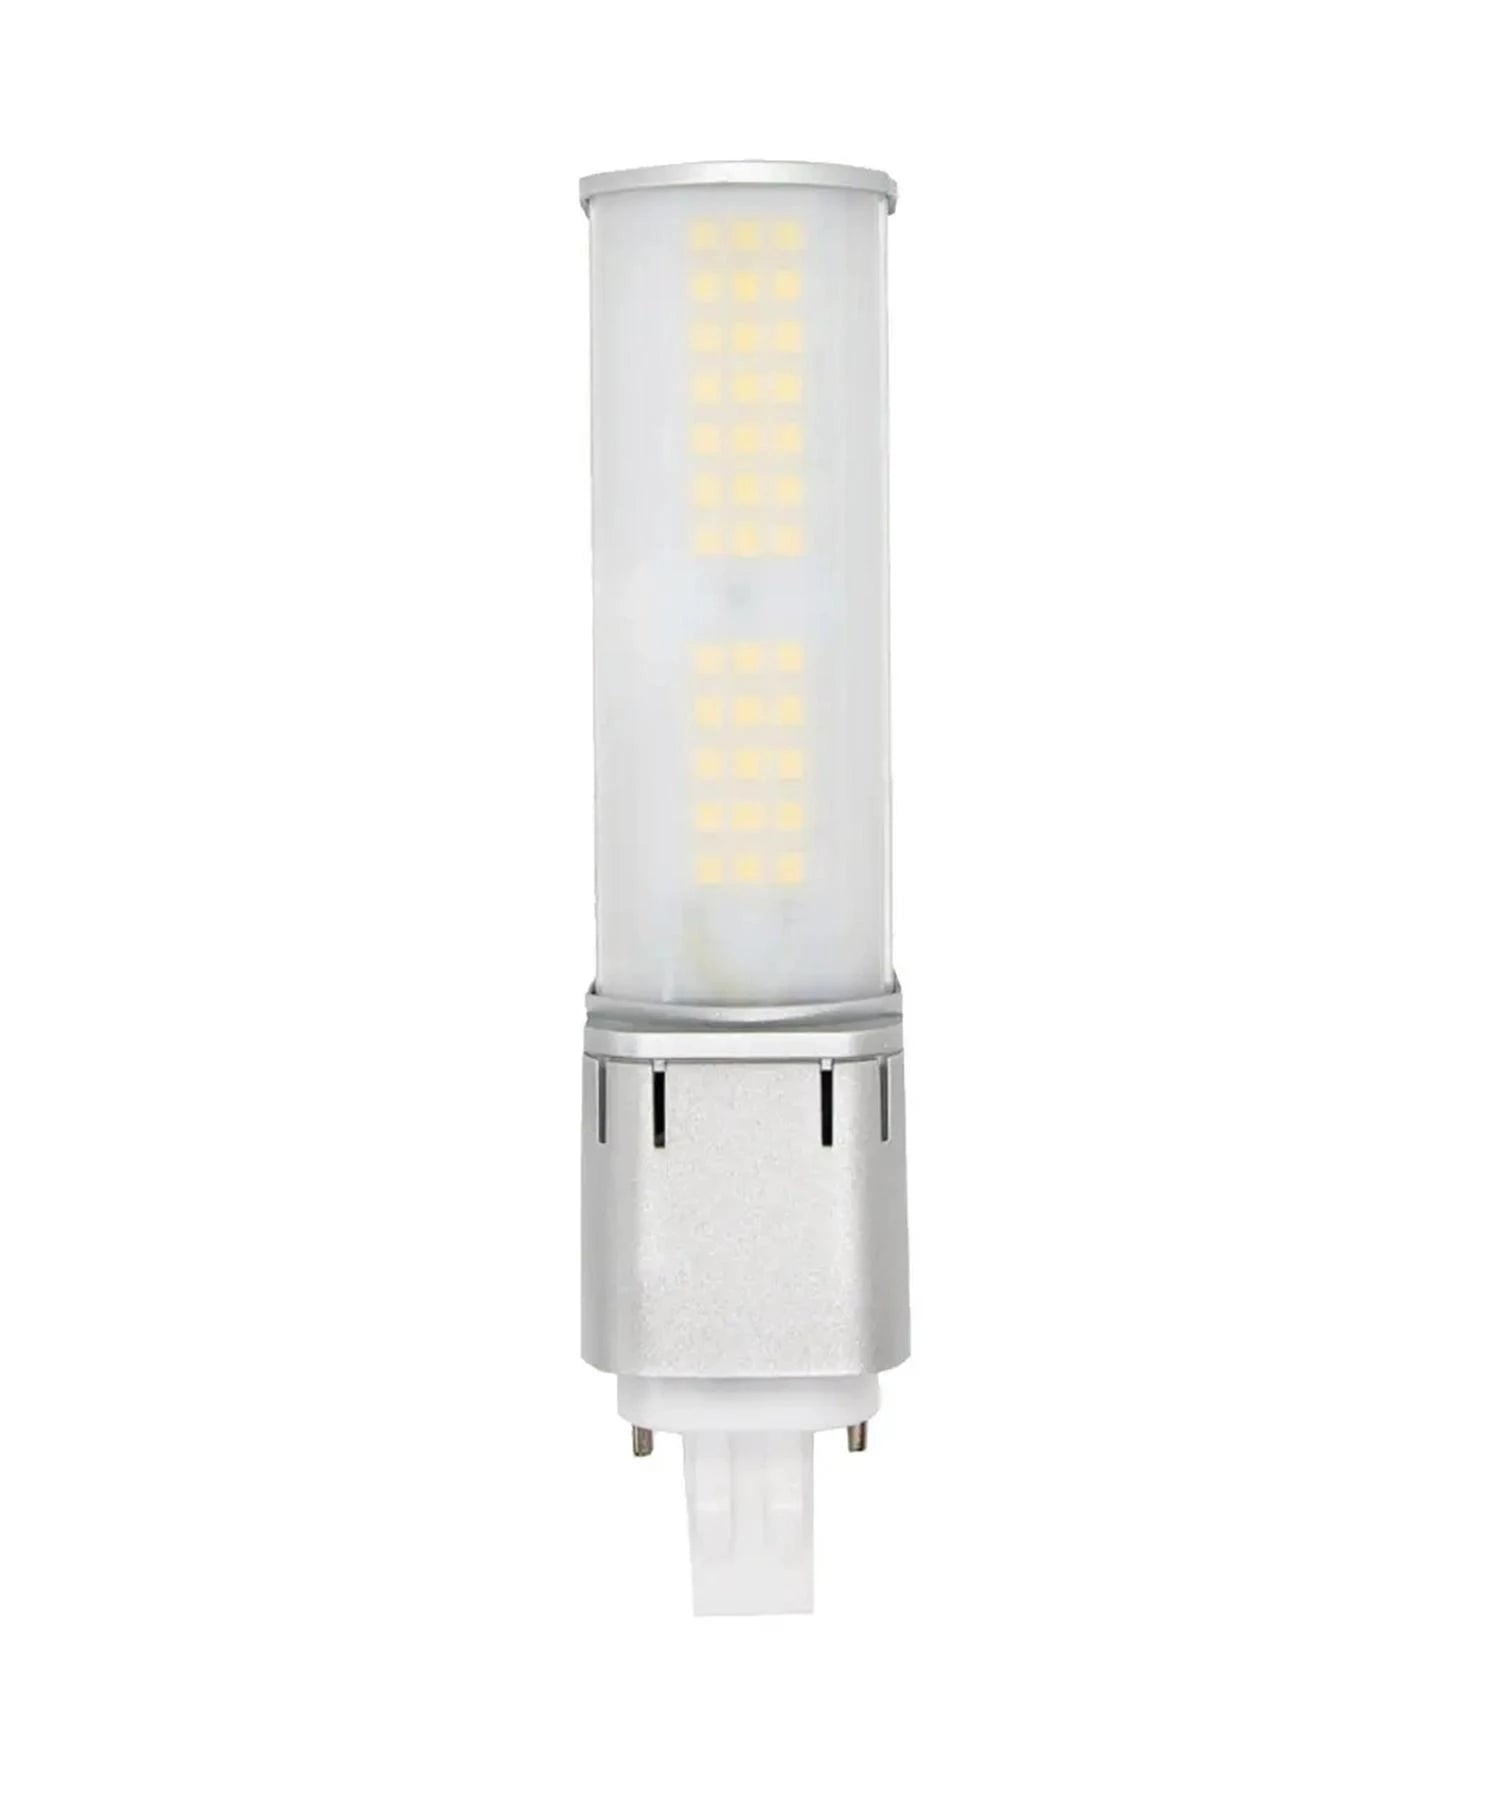 LED Plug-in Light Bulbs